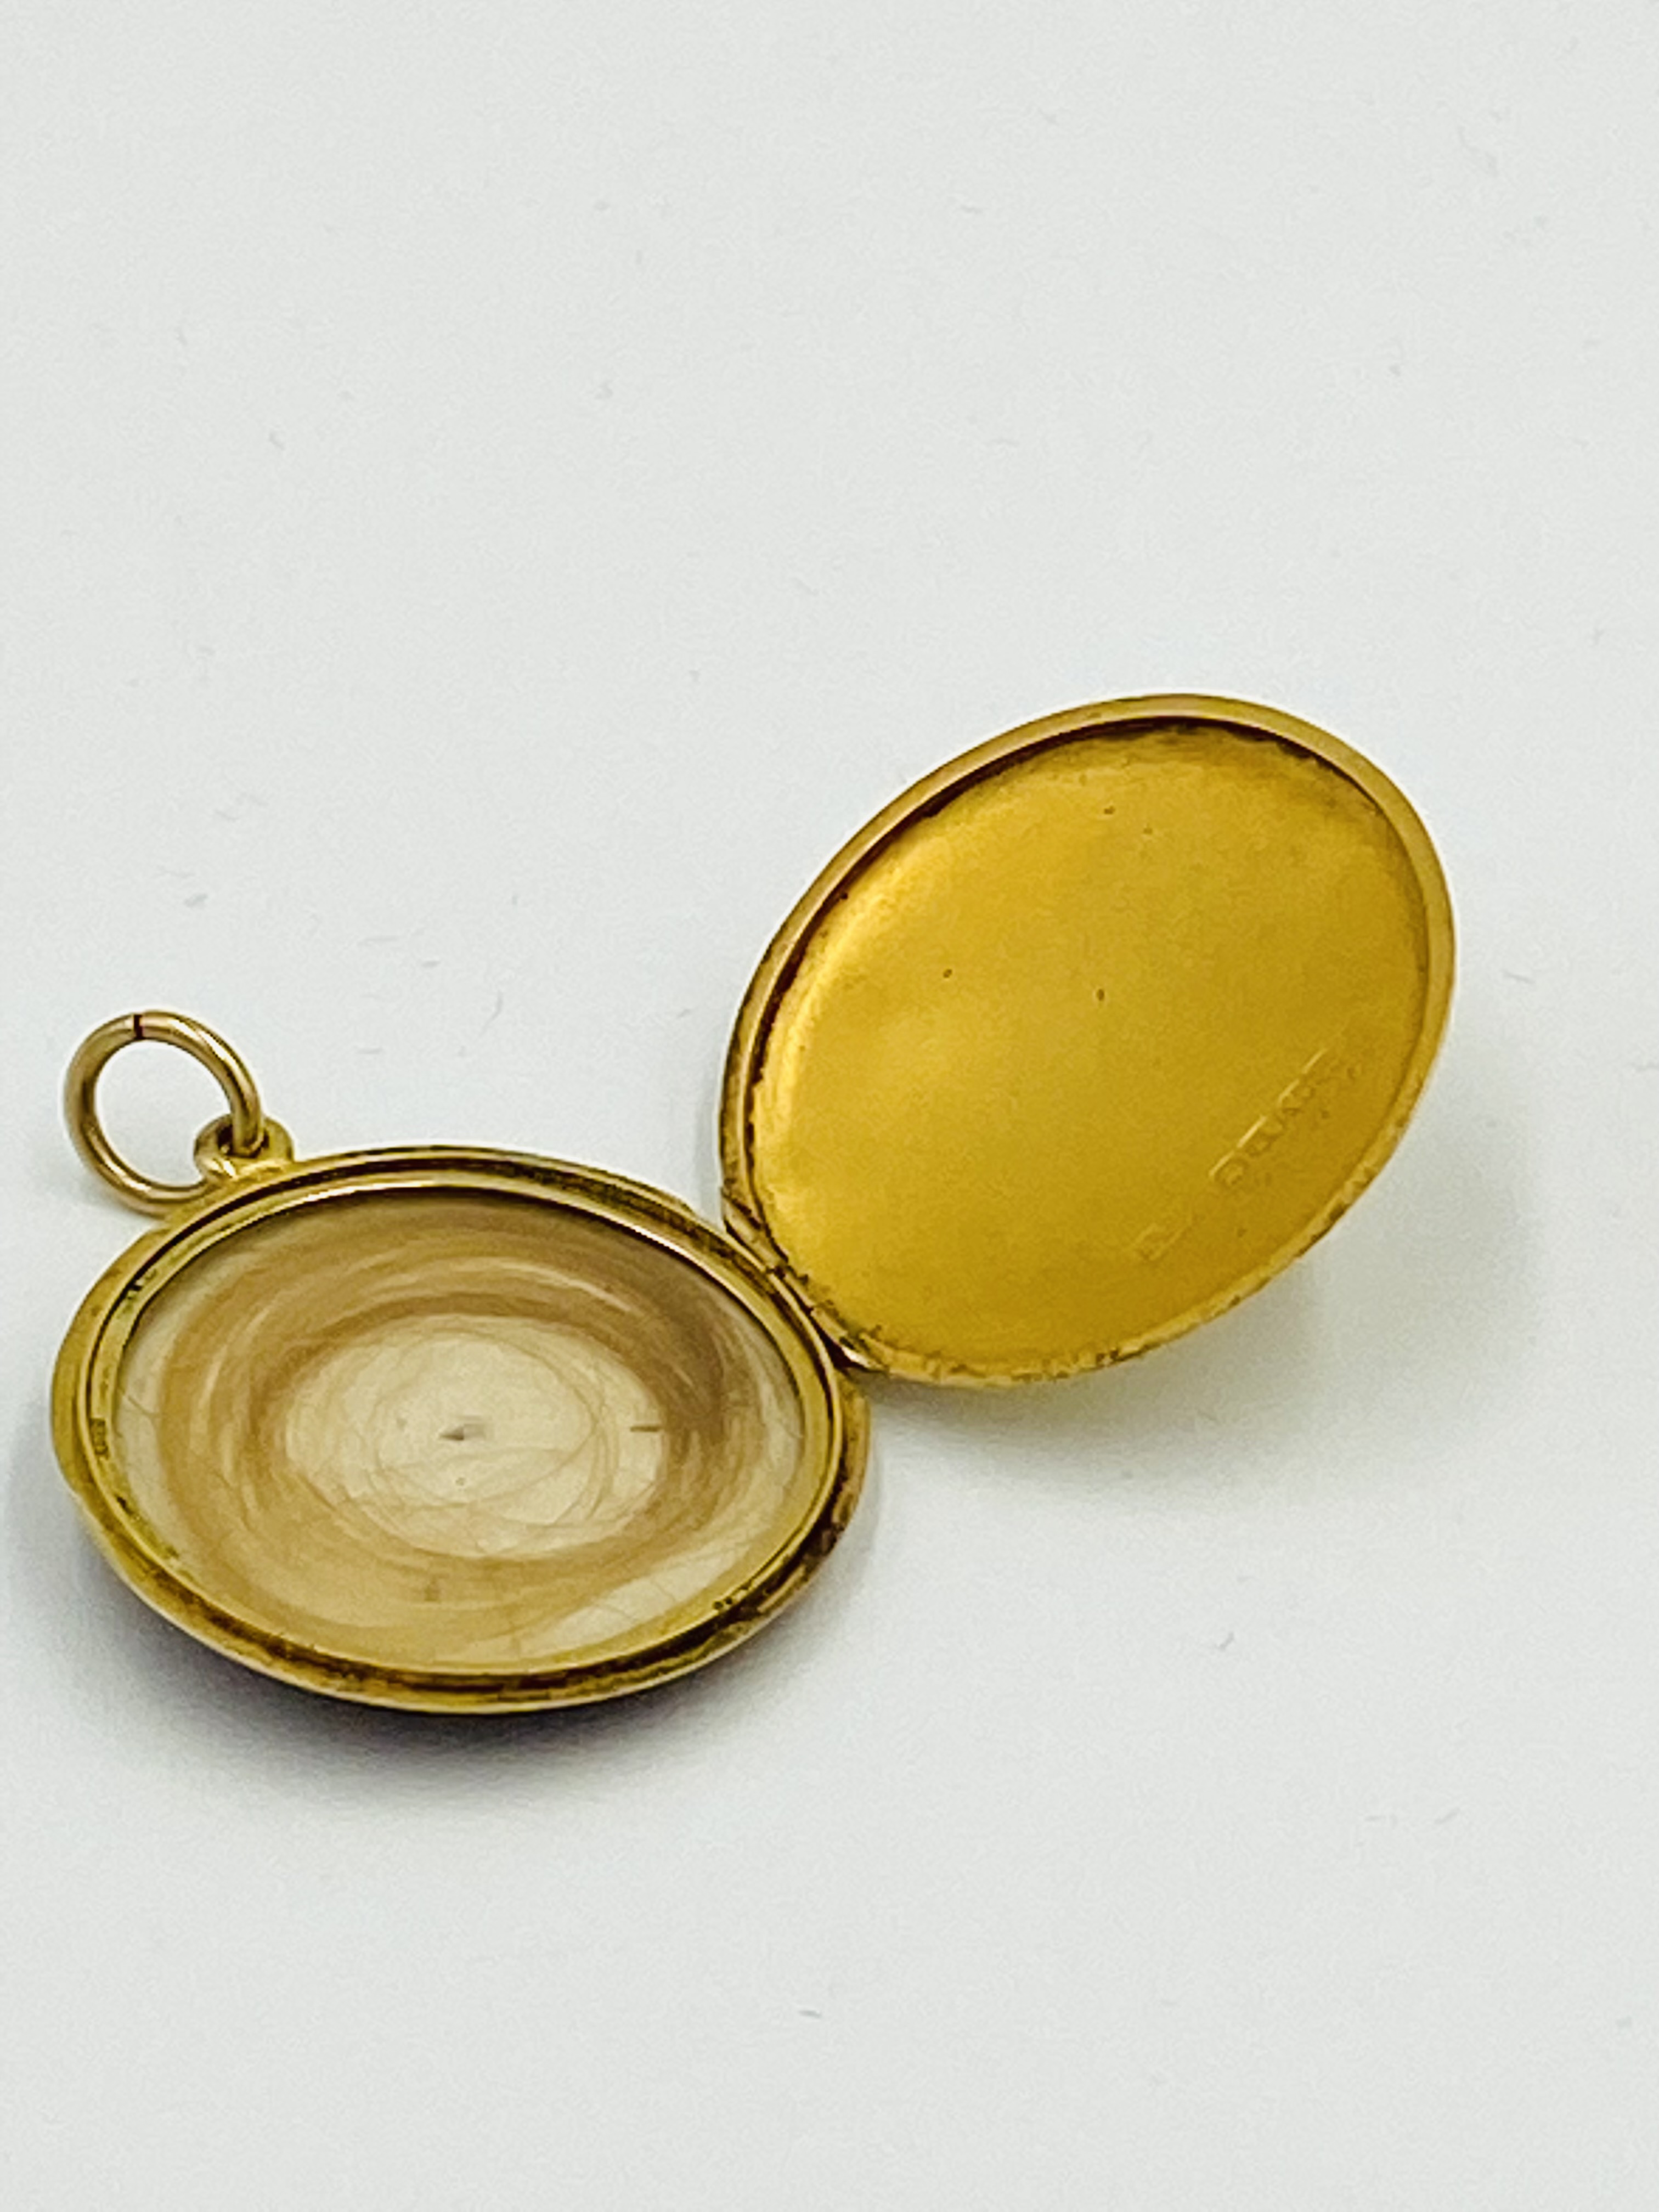 18ct, diamond and enamel locket/pendant - Image 4 of 4